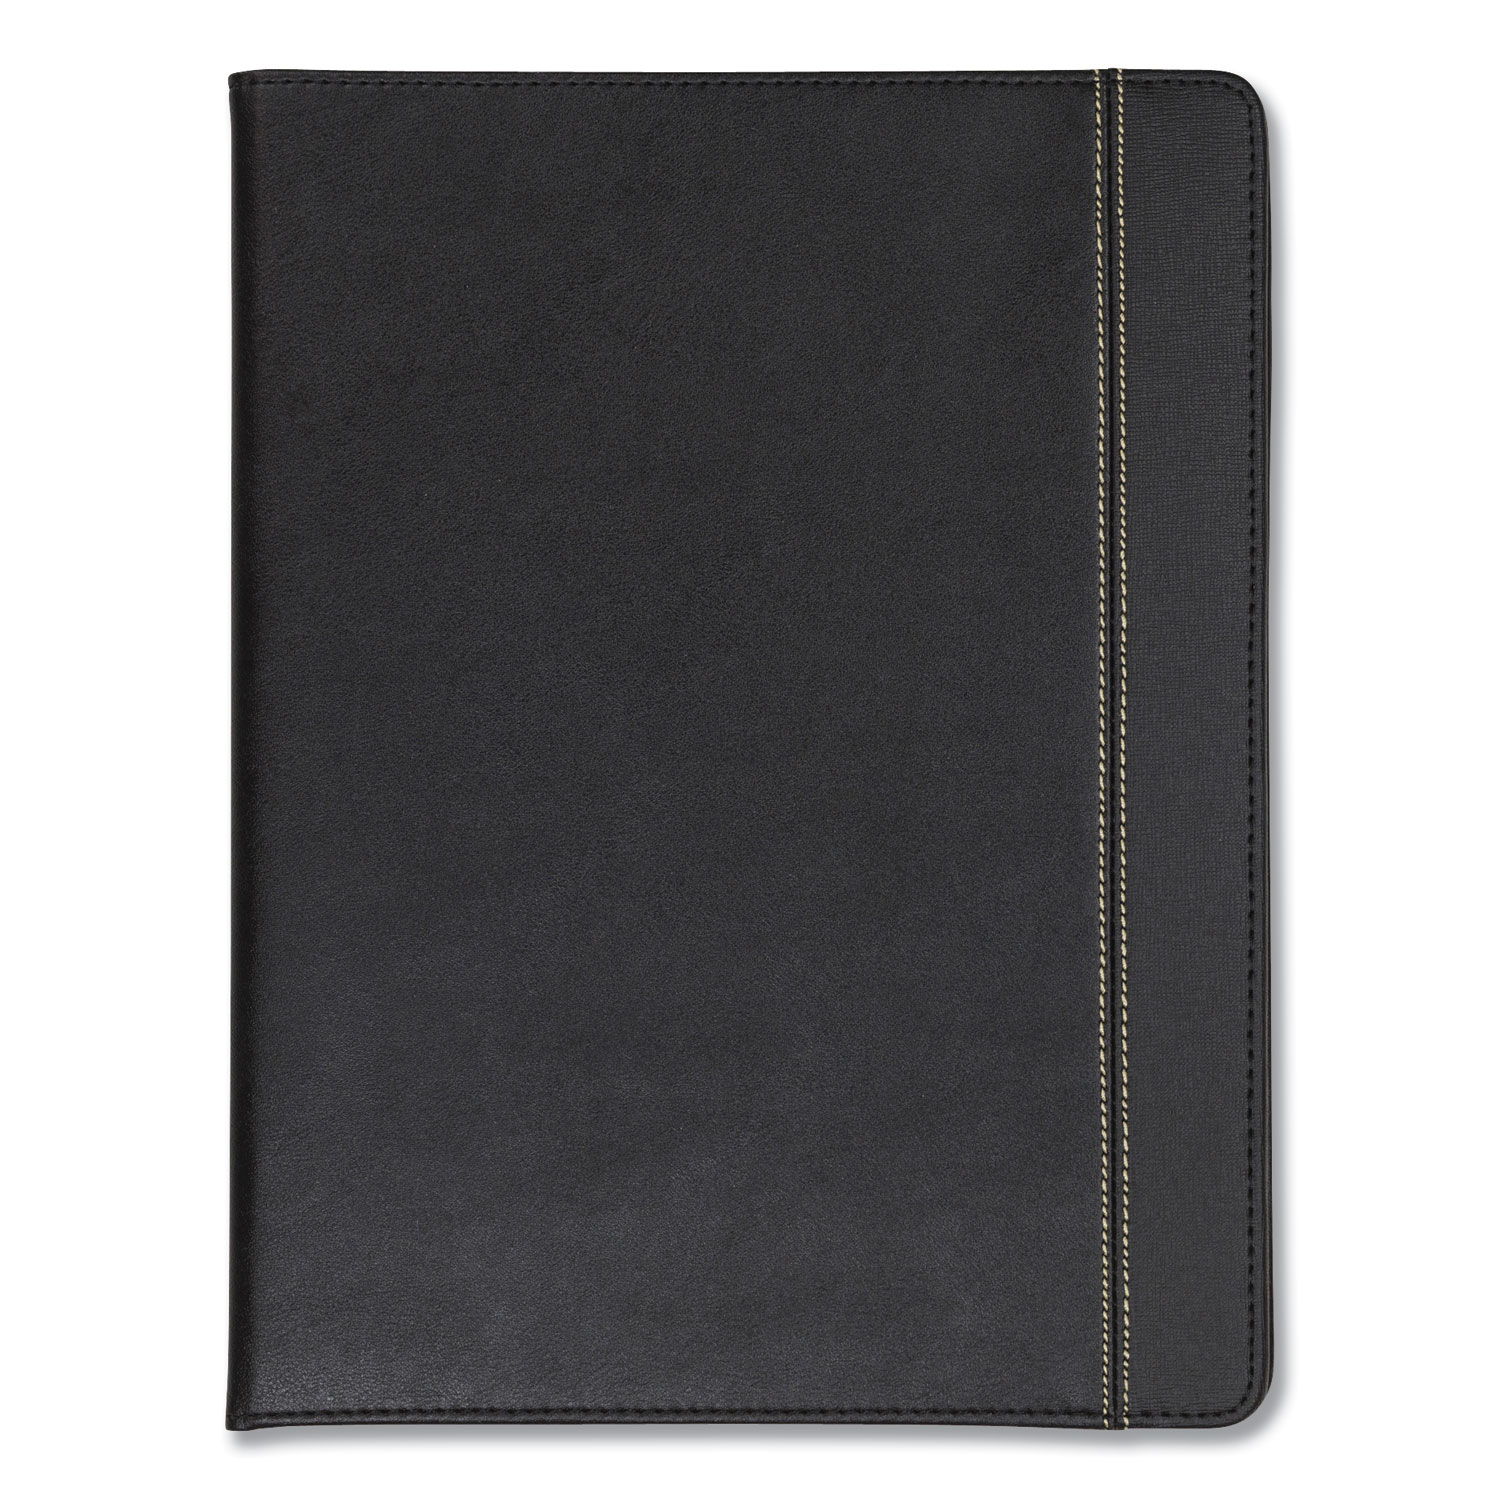 Samsill Leather Multi-Ring Zippered Portfolio Two-Part 1 Cap 11 x 13-1/2 Black